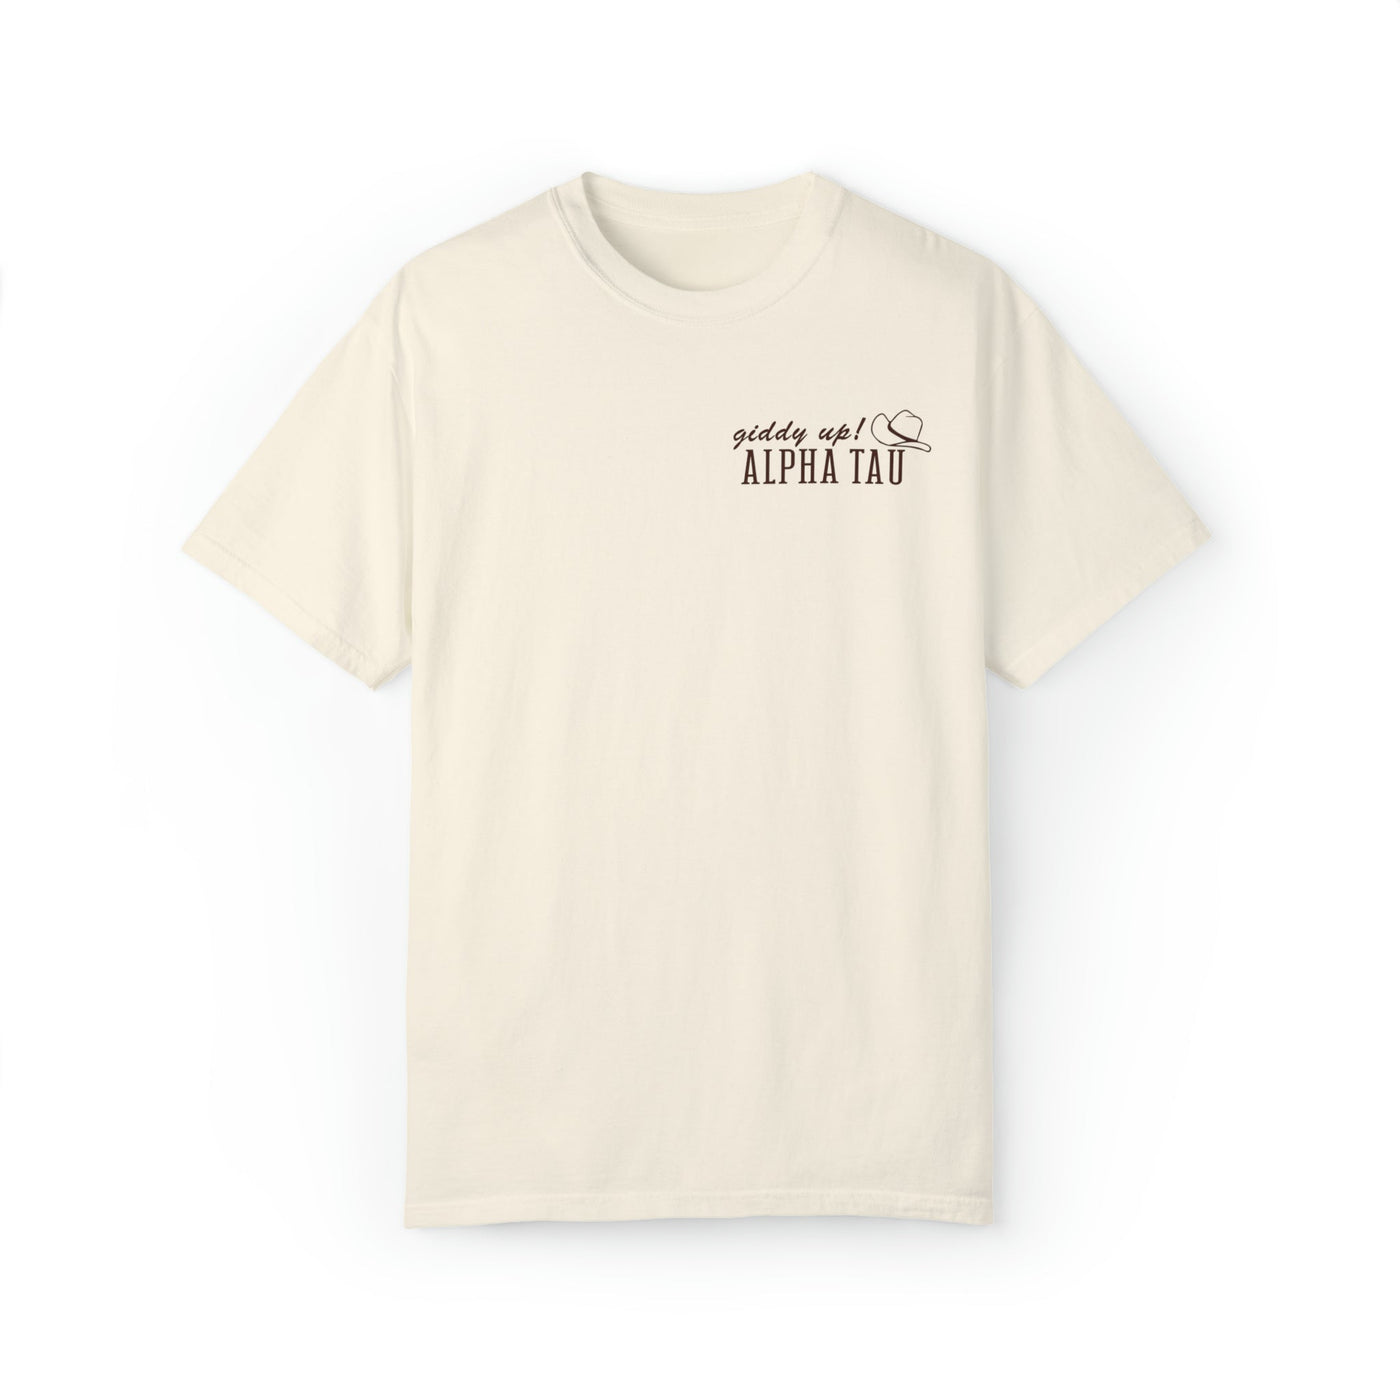 Alpha Sigma Tau Country Western Sorority T-shirt